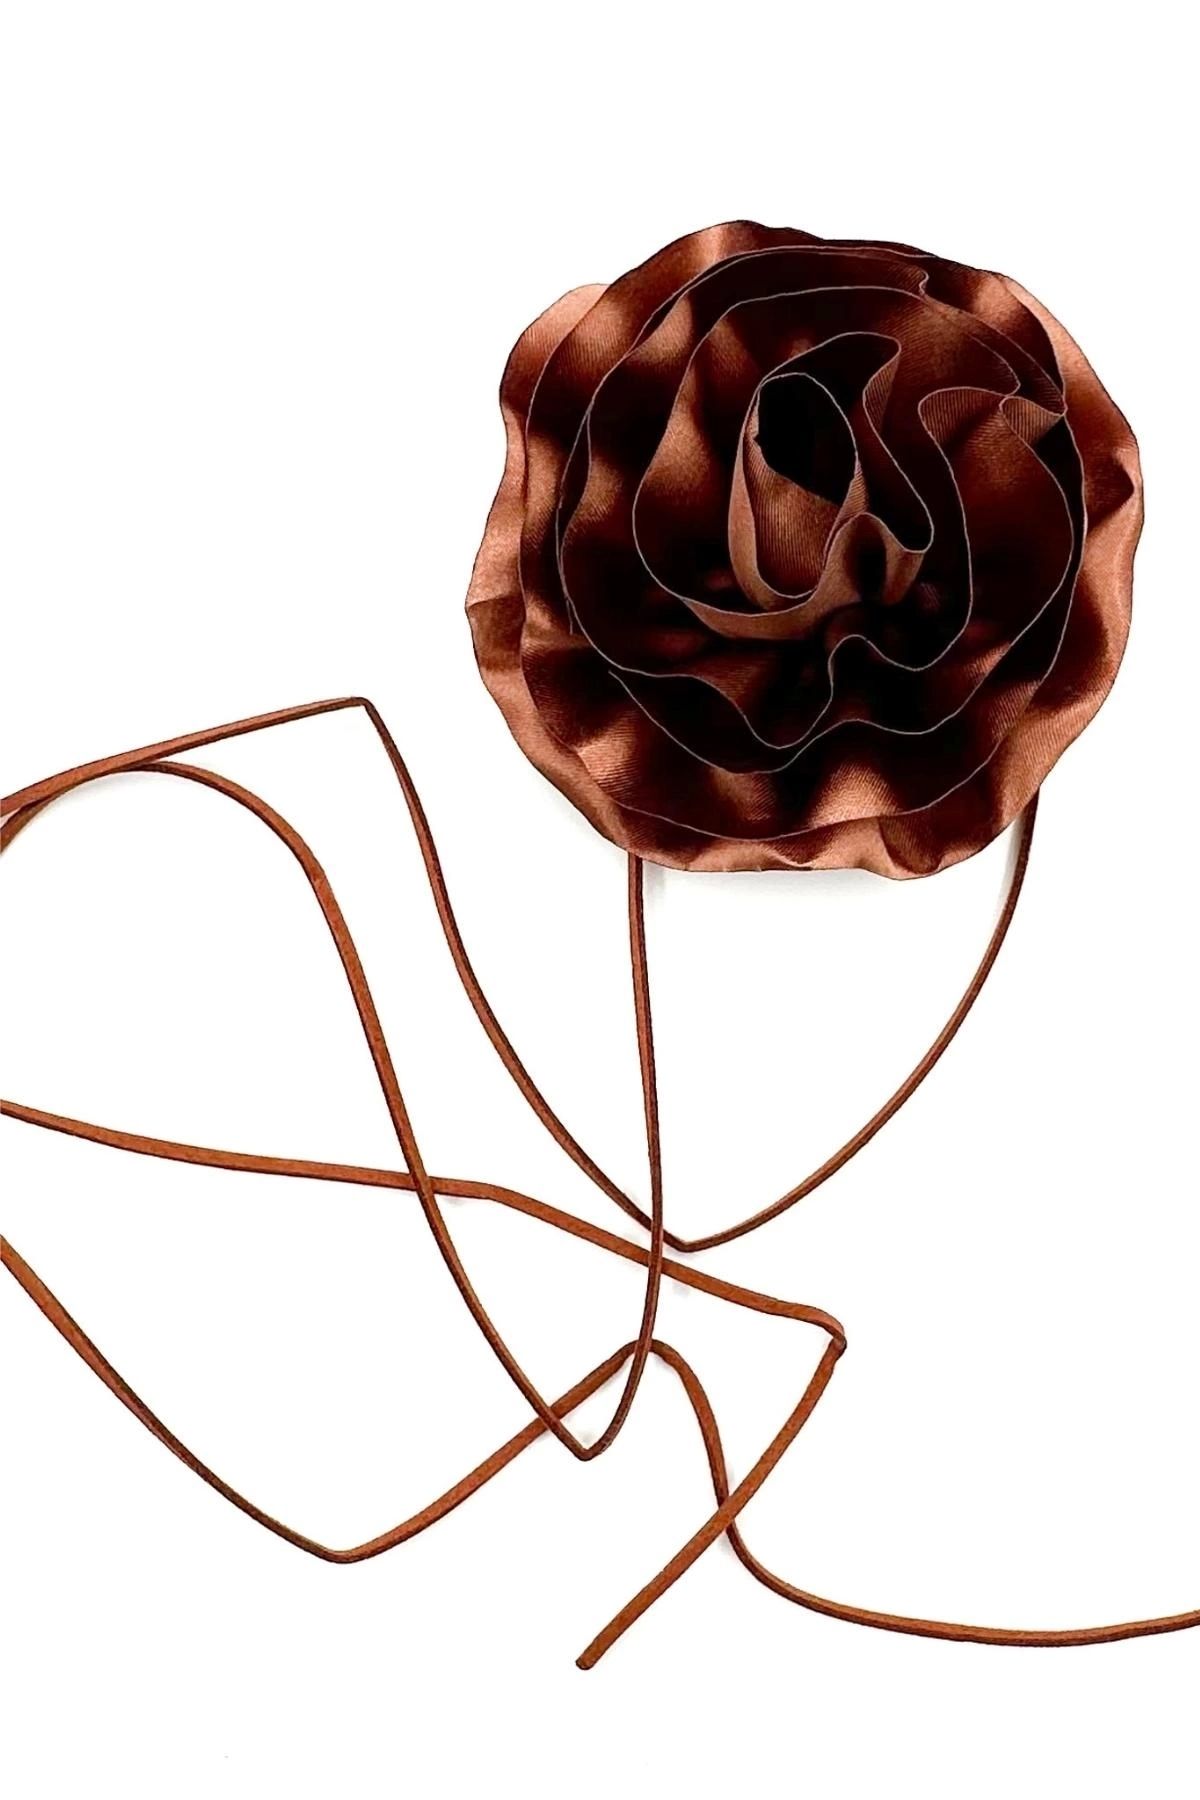 LOGO AKSESUAR Çiçek Choker Kolye Saten Kahverengi Yuvarlak Tasarım (120cm)